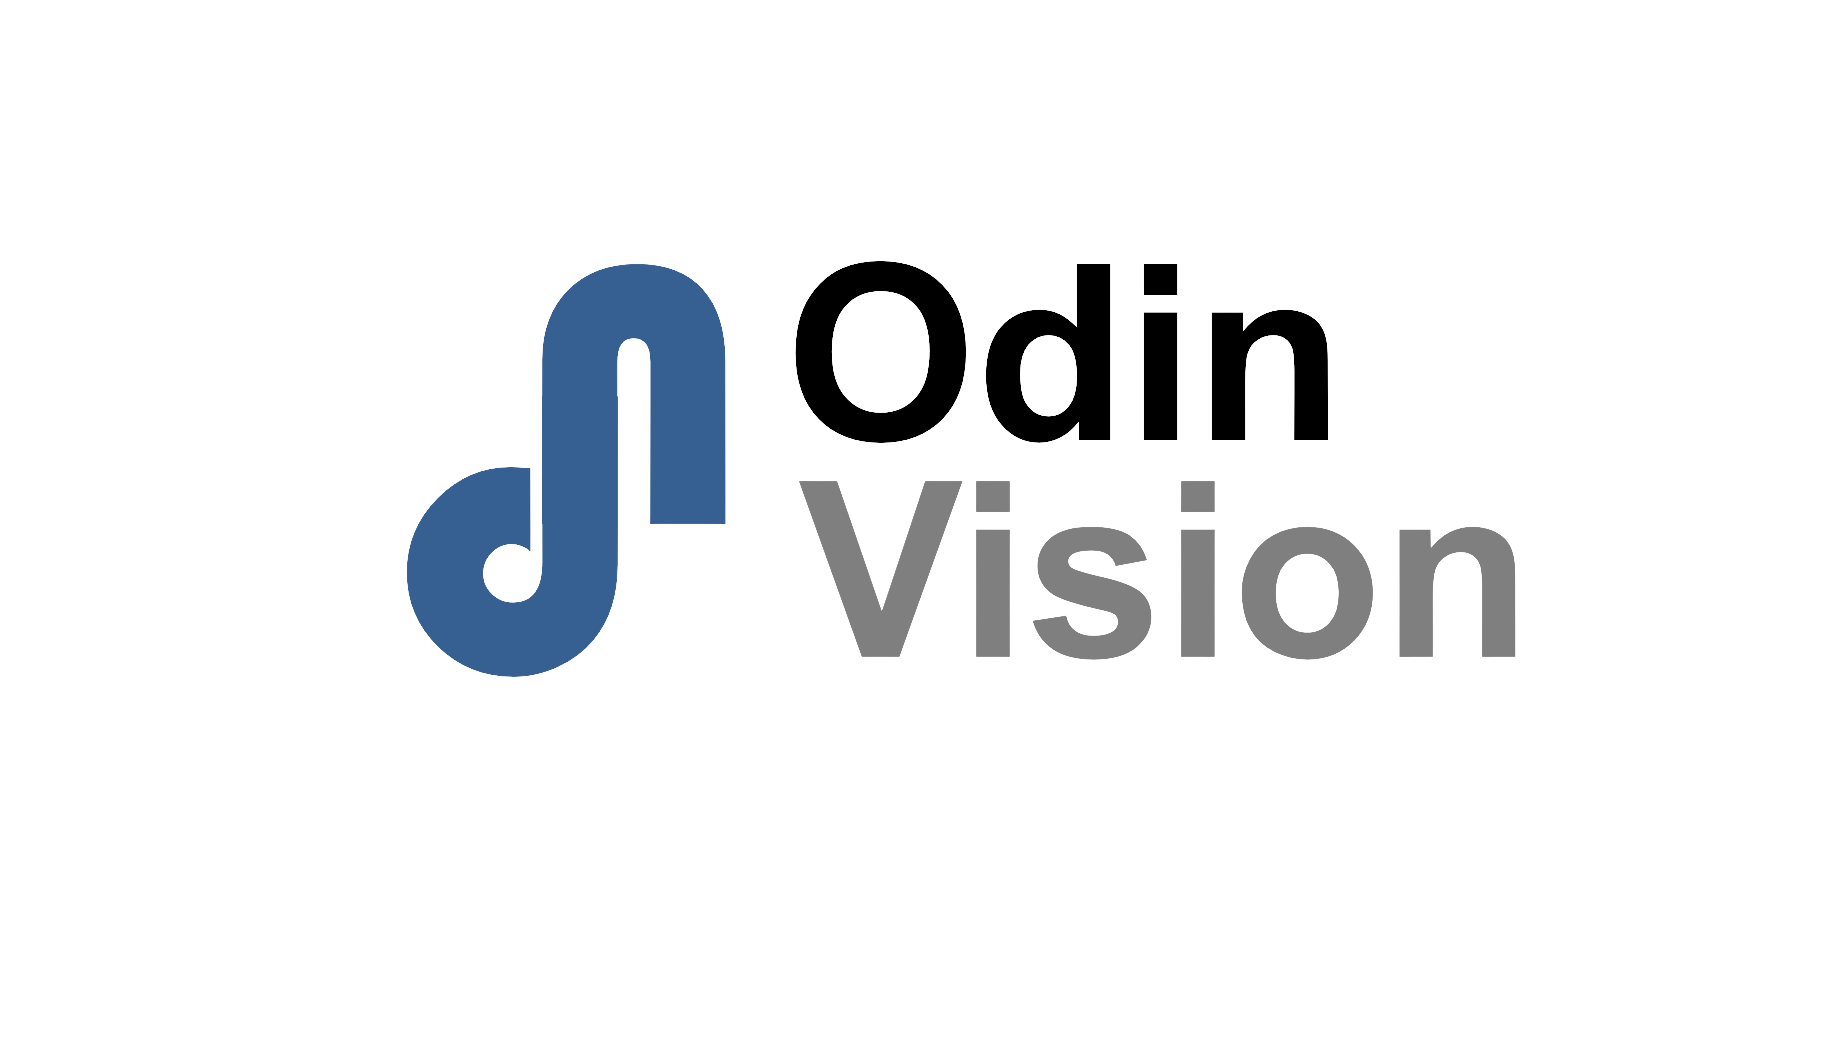 Odin Vision logo, background removed logo